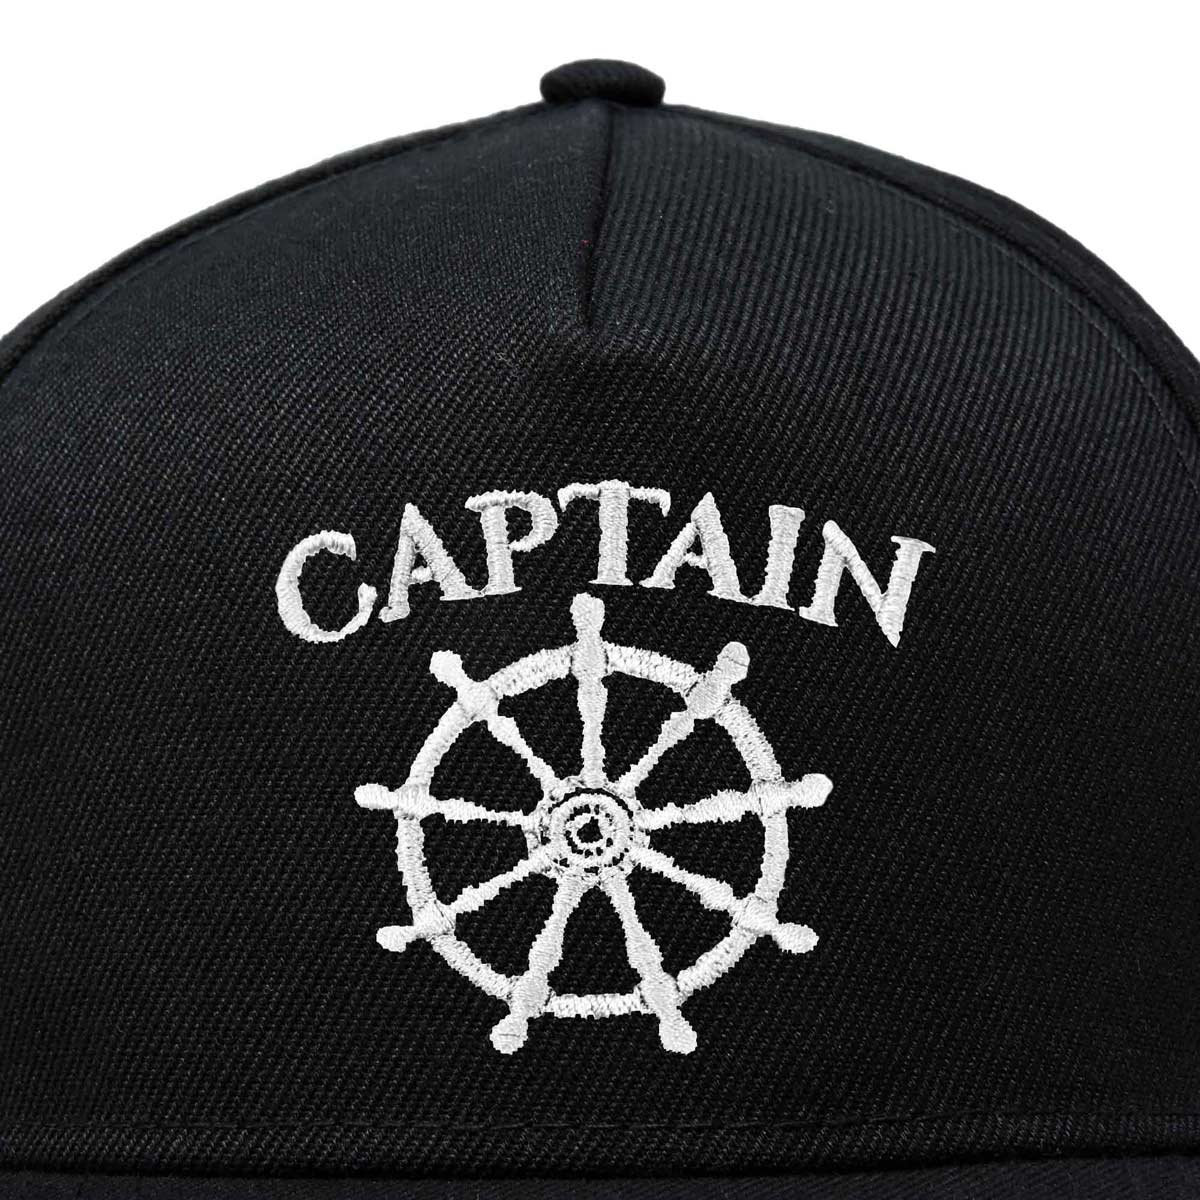 Dalix Captain Snapback Hat